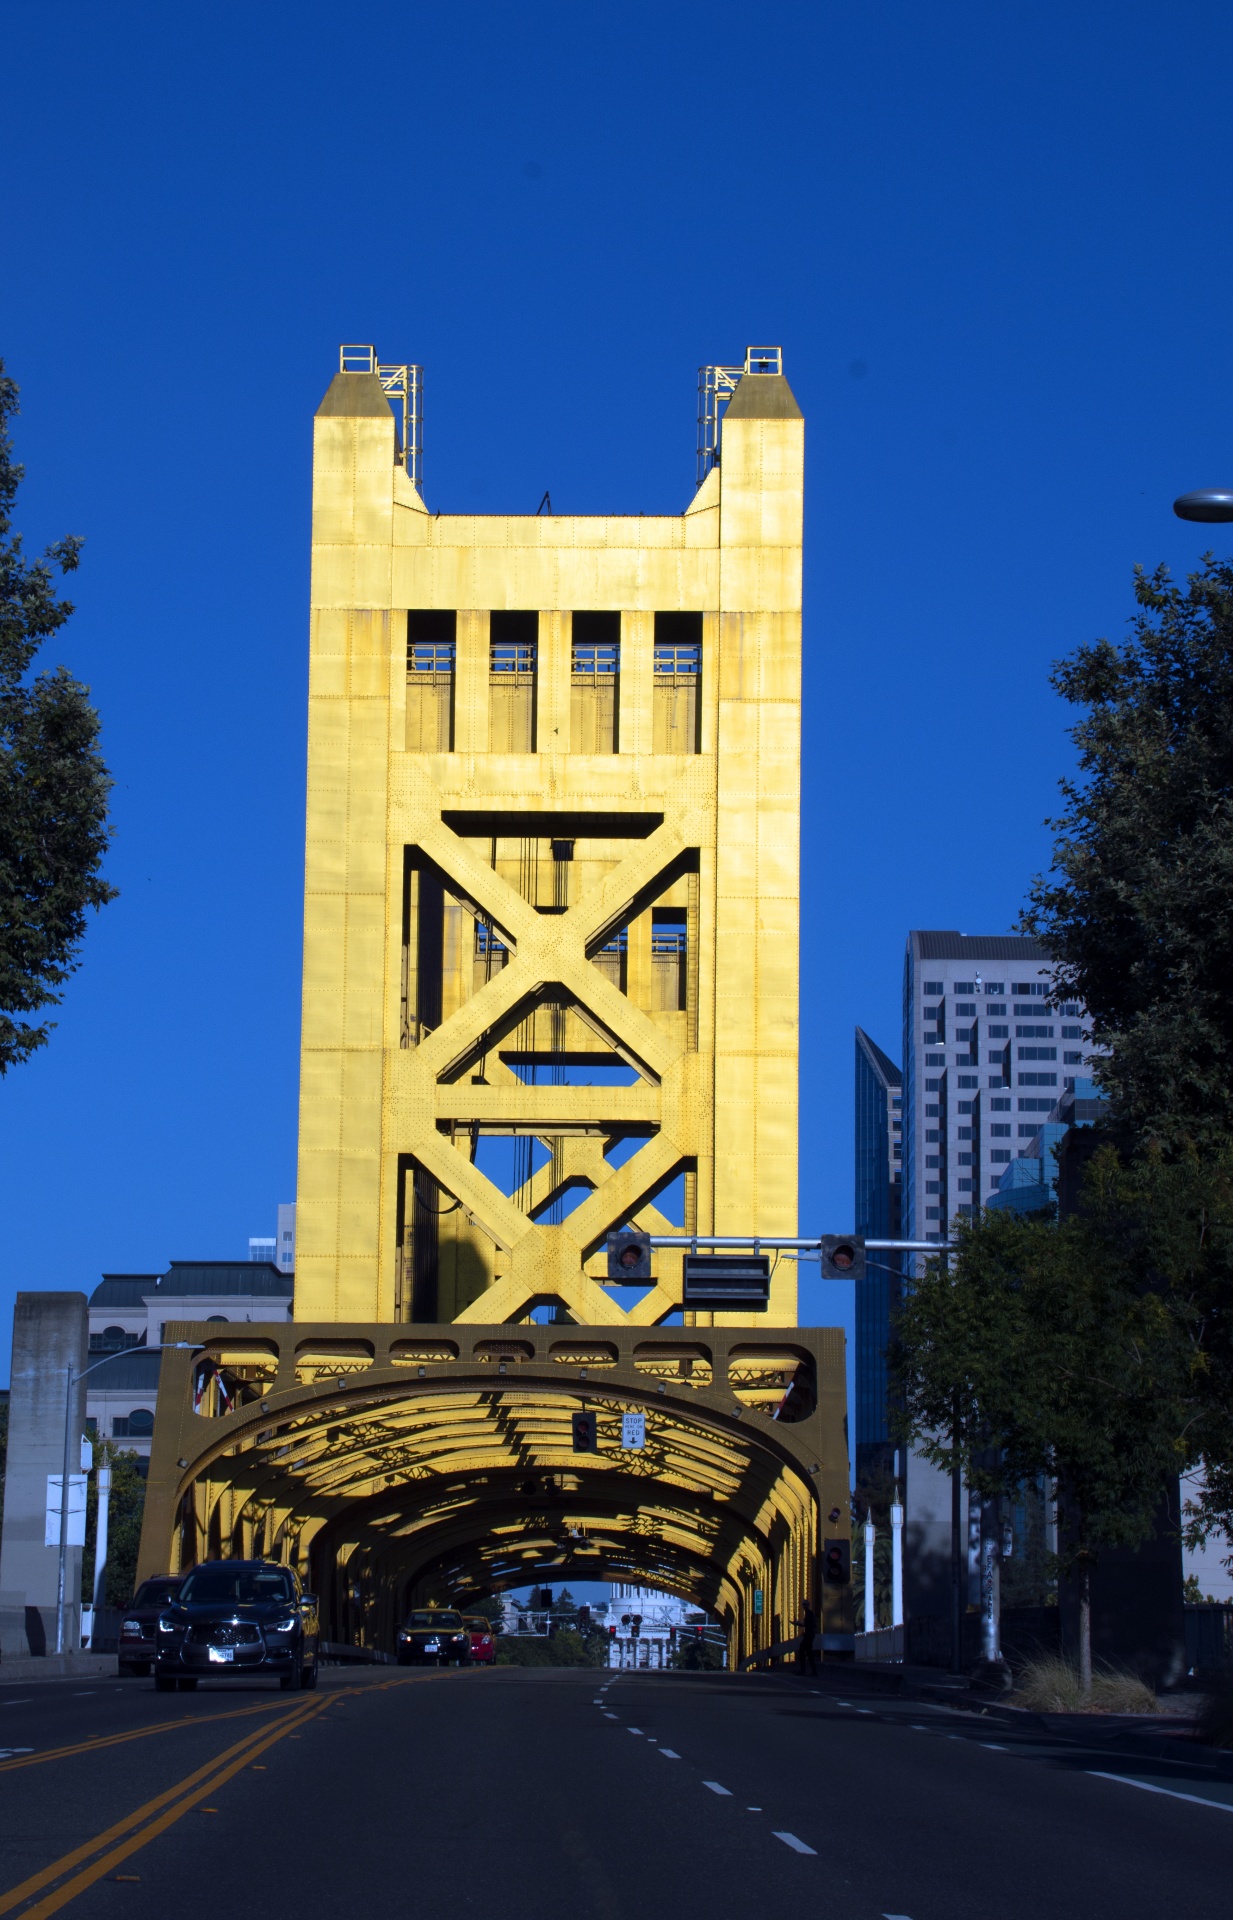 Sacramento sollevato Tower Bridge